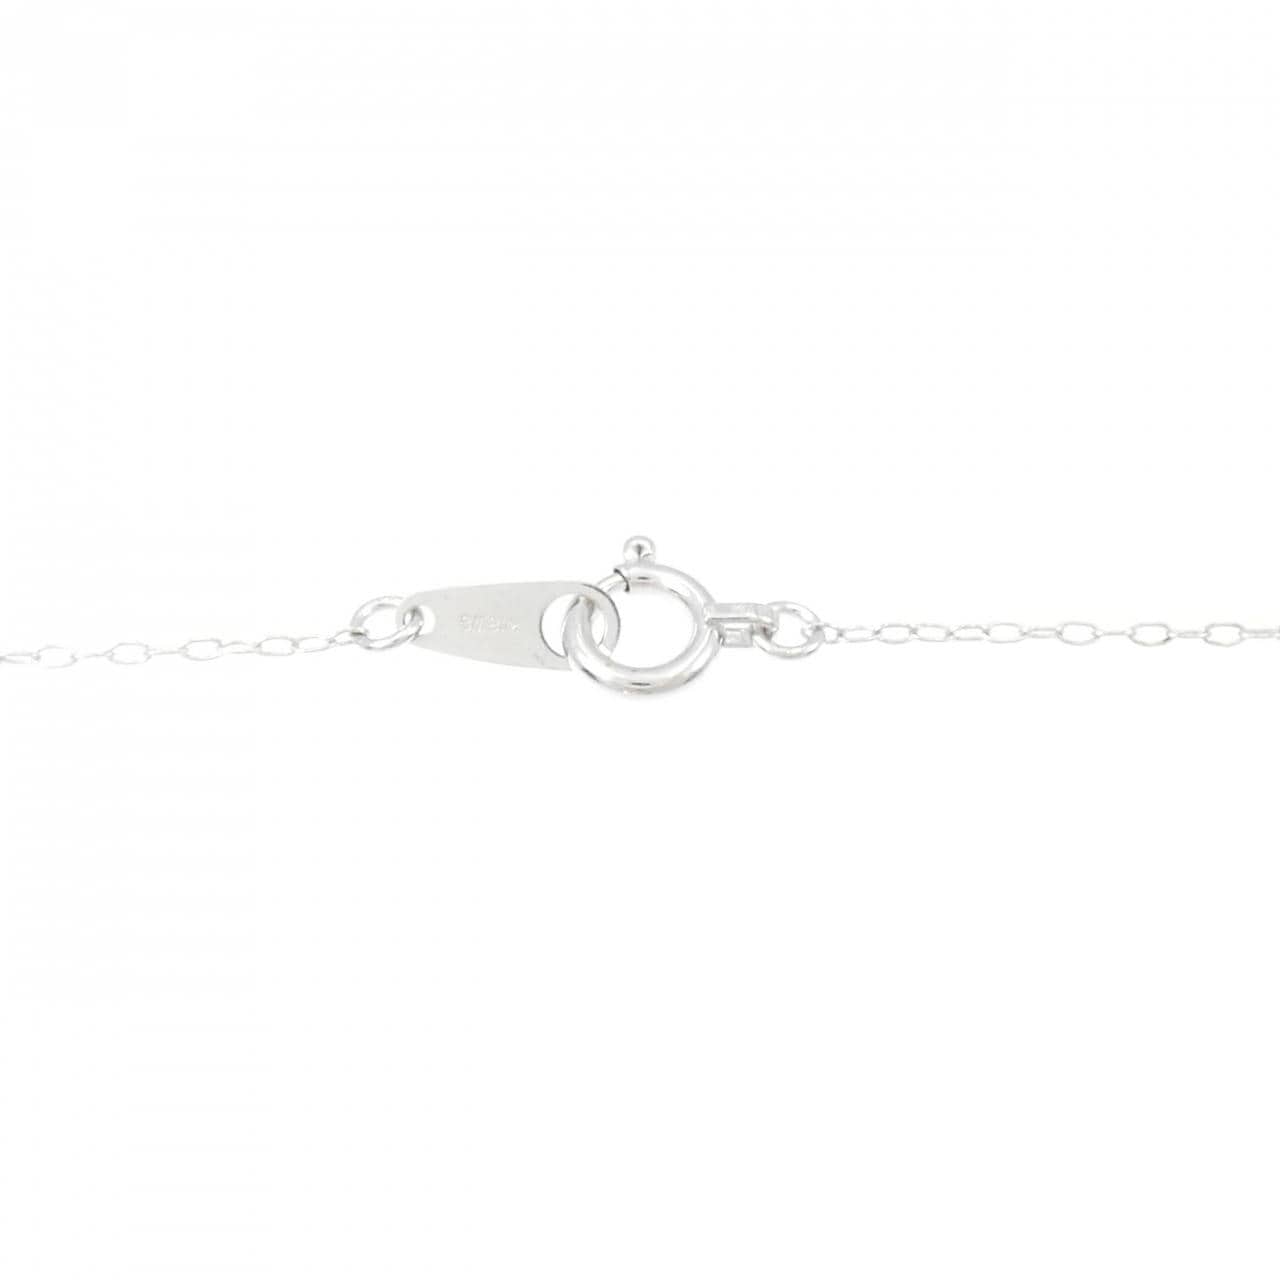 K18WG heart Diamond necklace 0.16CT